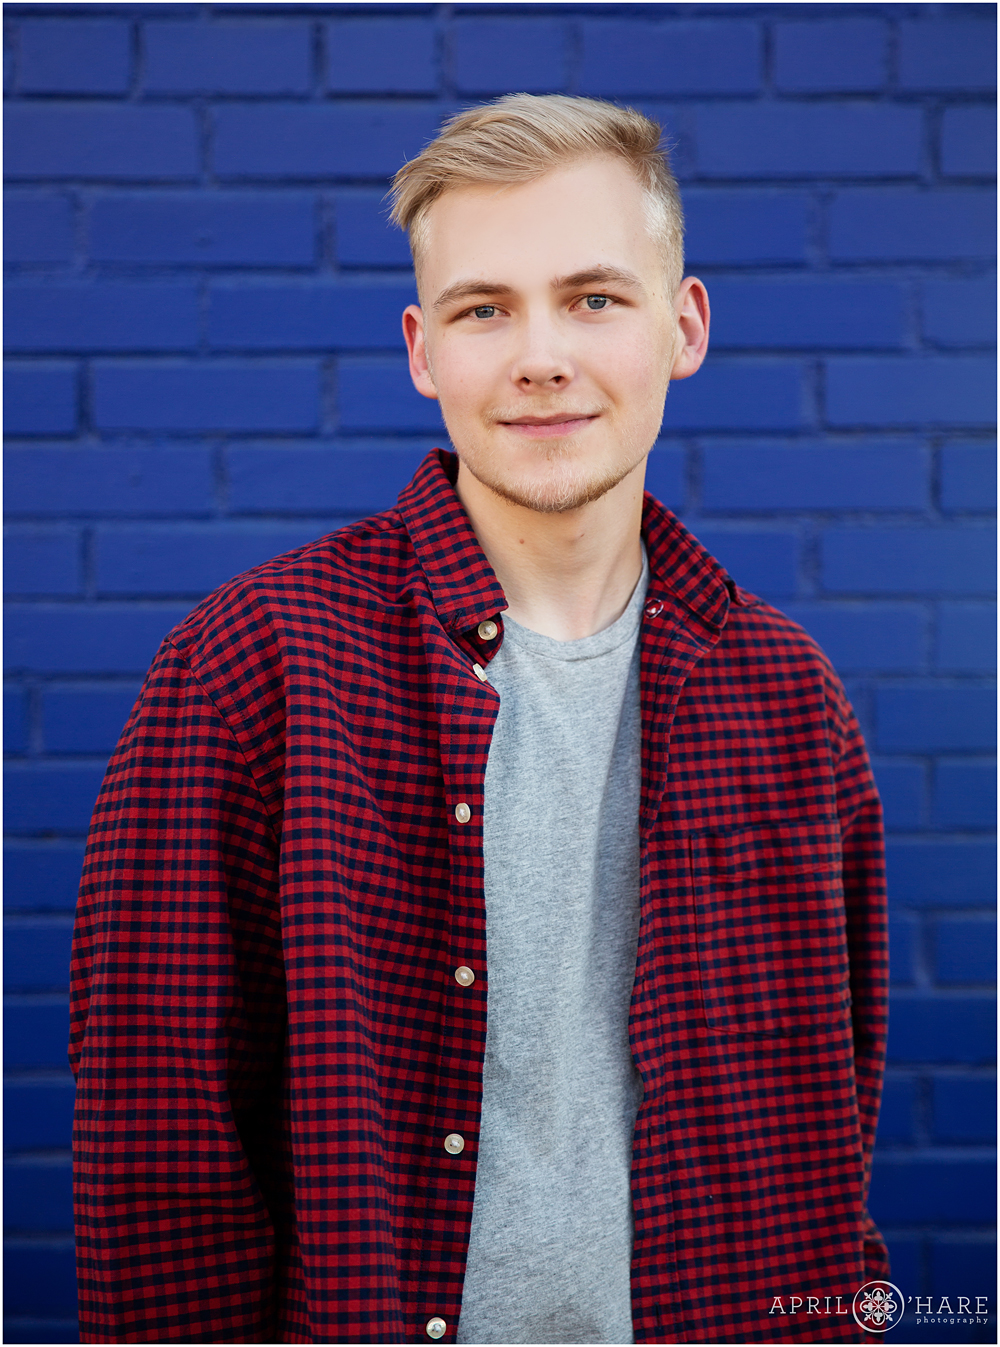 Classic High School Senior Boy Photo with Blue Brick Wall Backdrop